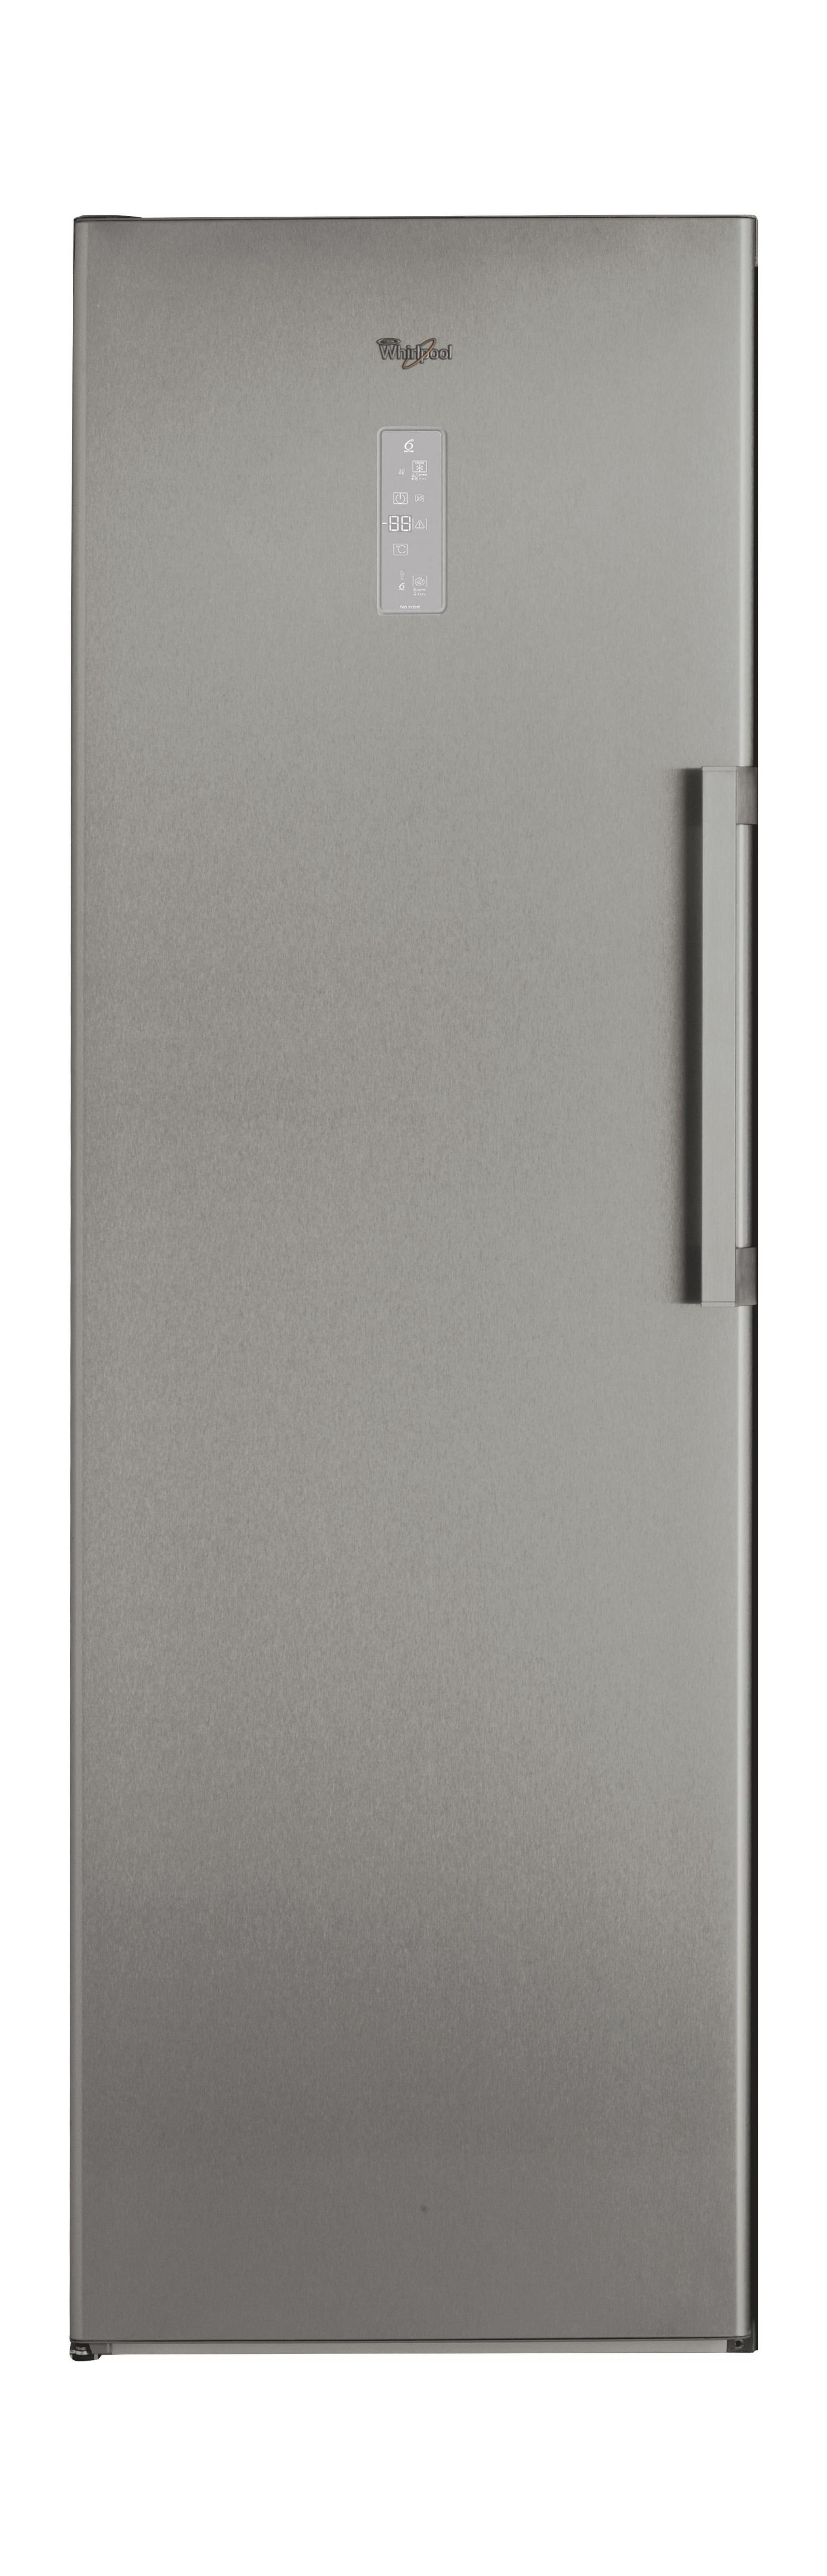 Whirlpool 10 CFT Upright Freezer + Whirlpool 13-CFT Single Door Refrigerator